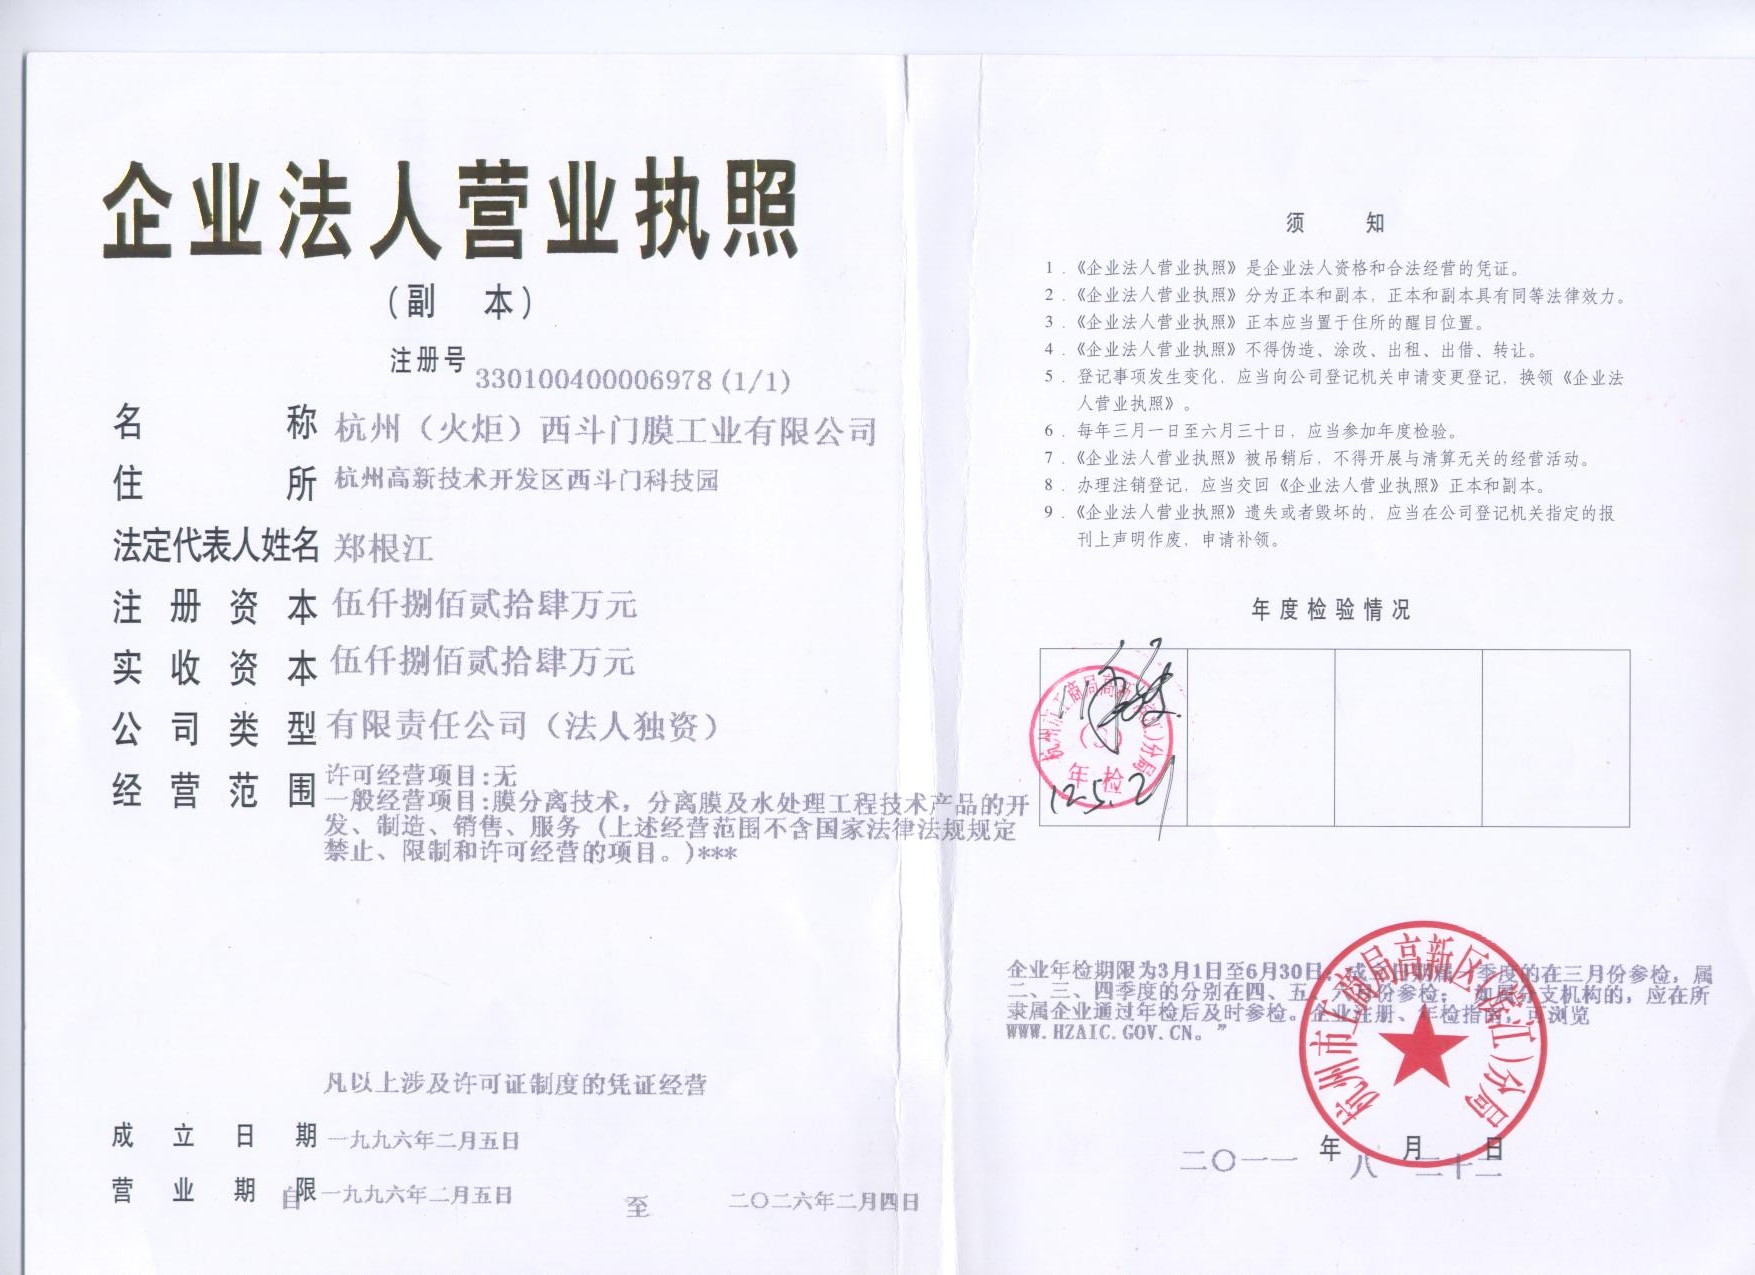 Business License for Hangzhou (Torch) Xinomen Membrane Industry Co Ltd